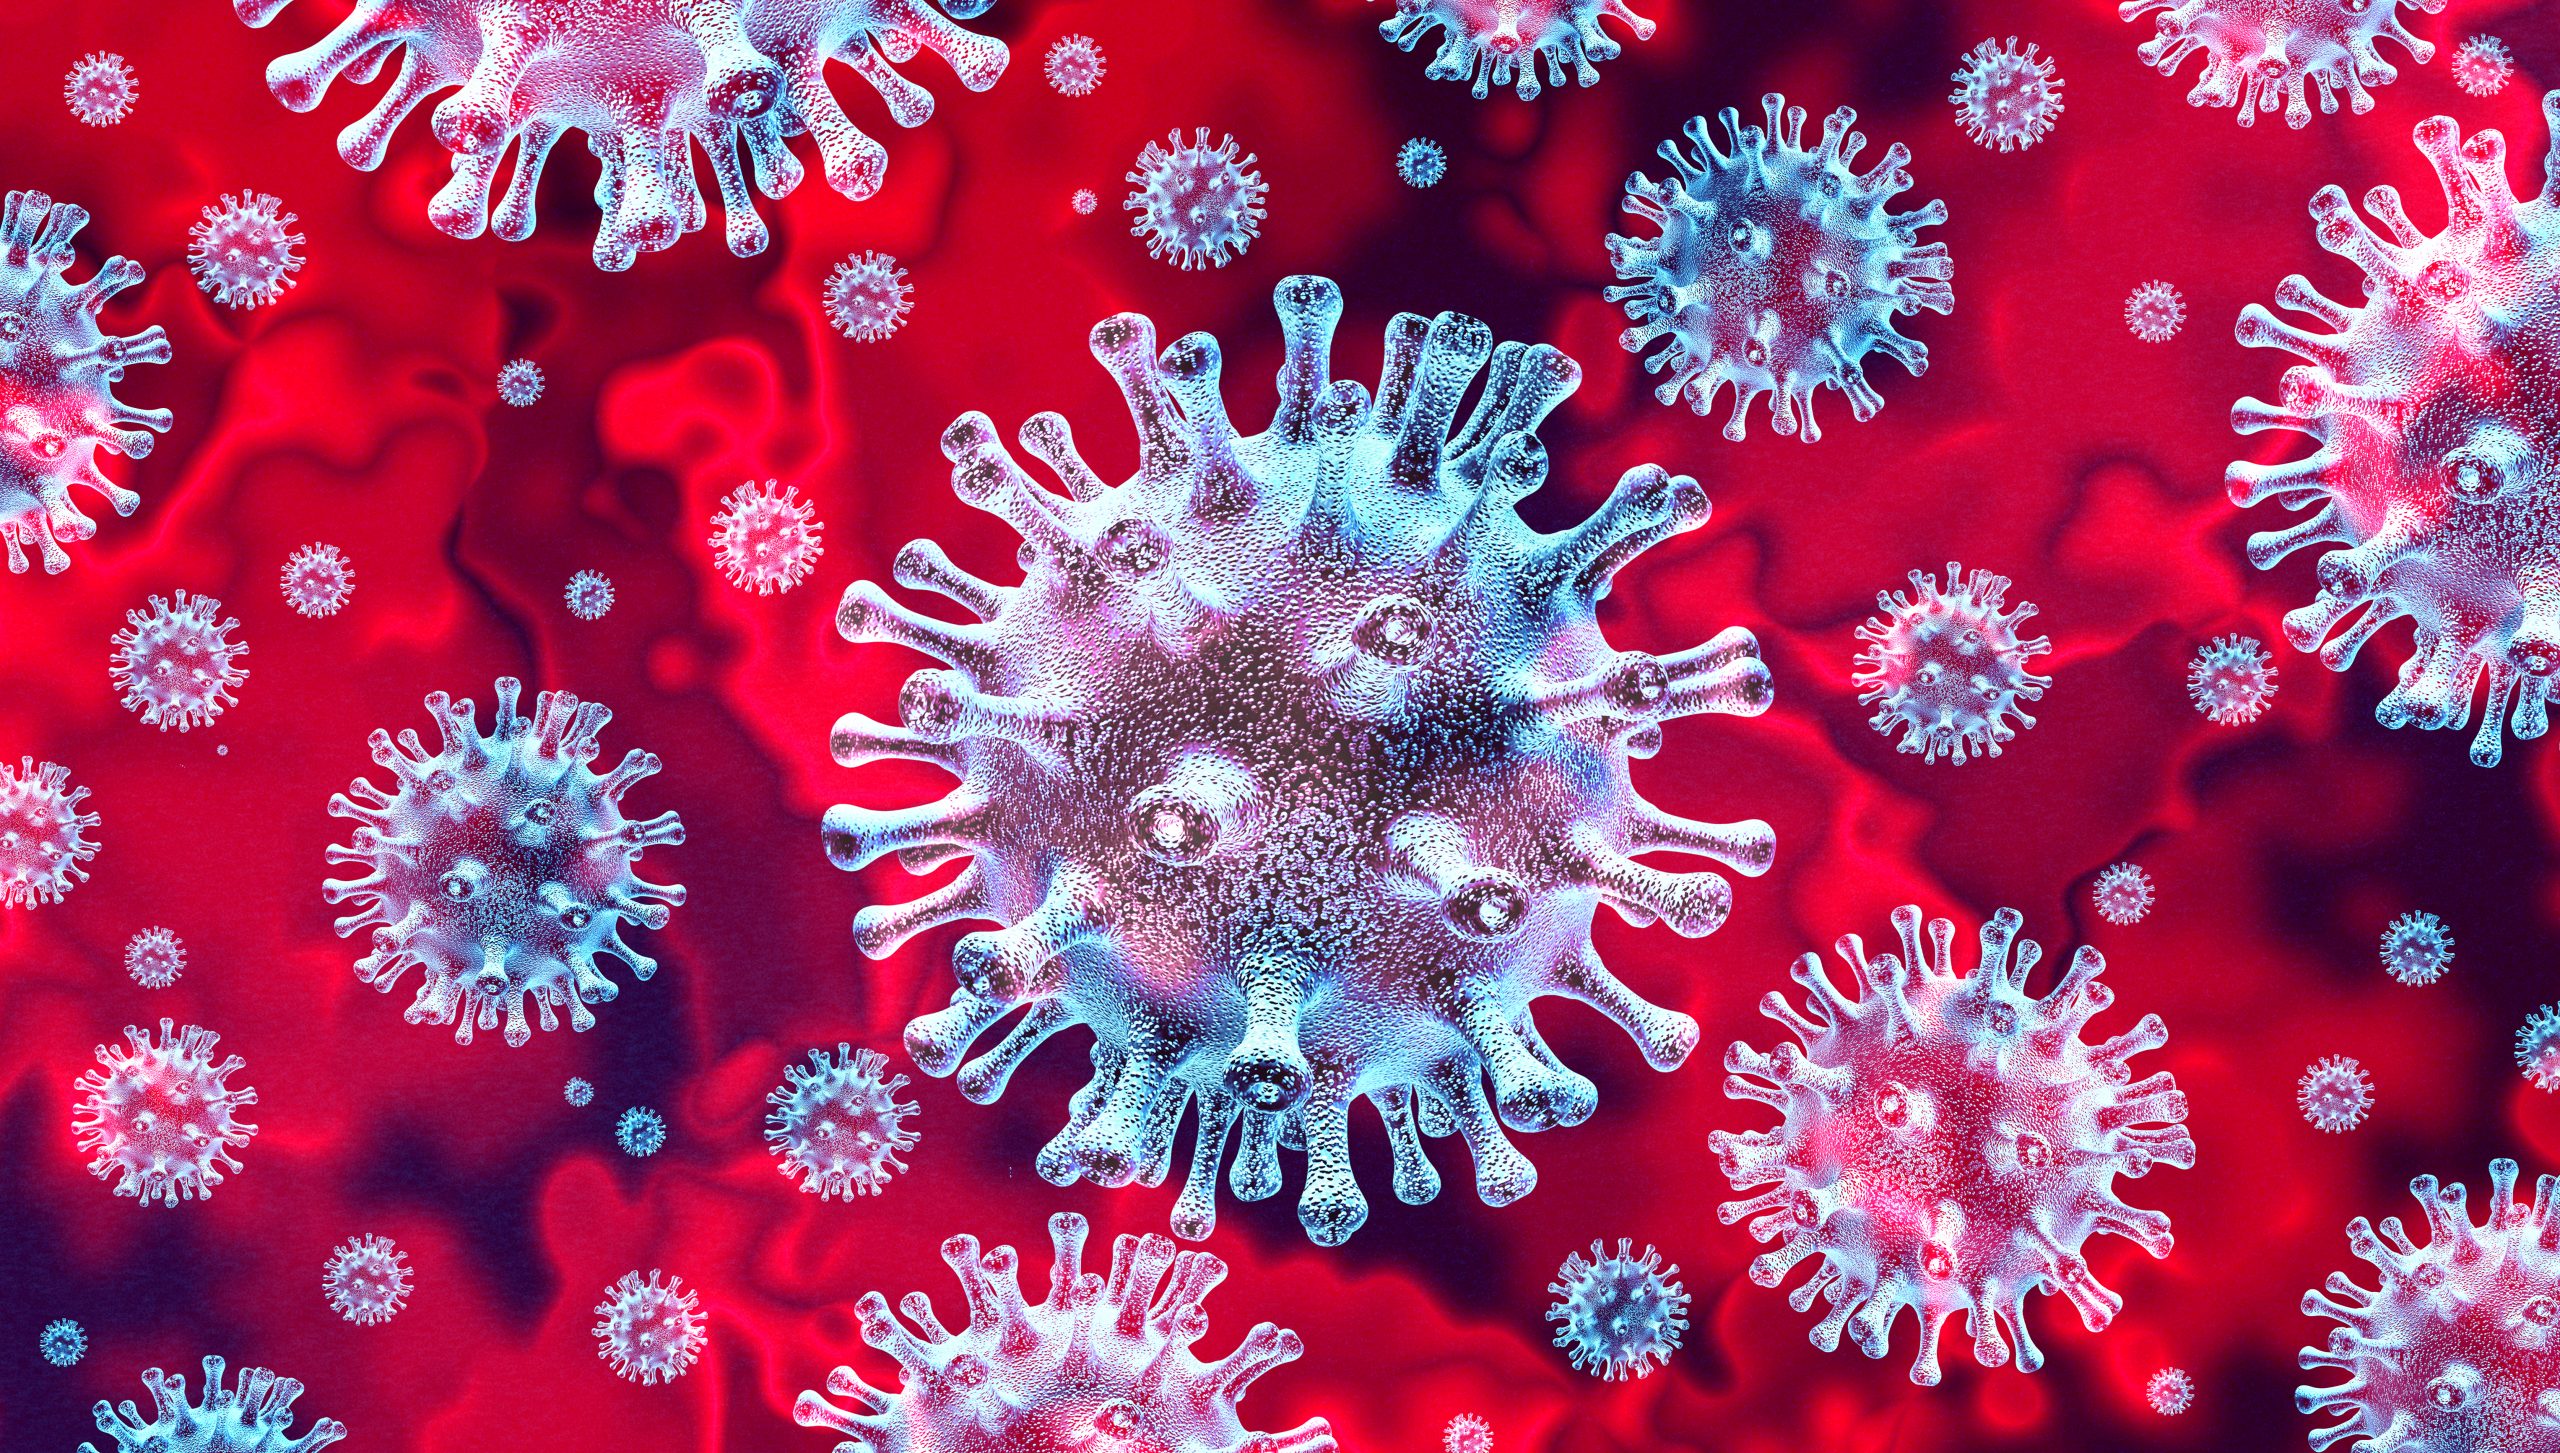 Coronavirus Cells Zoomed In